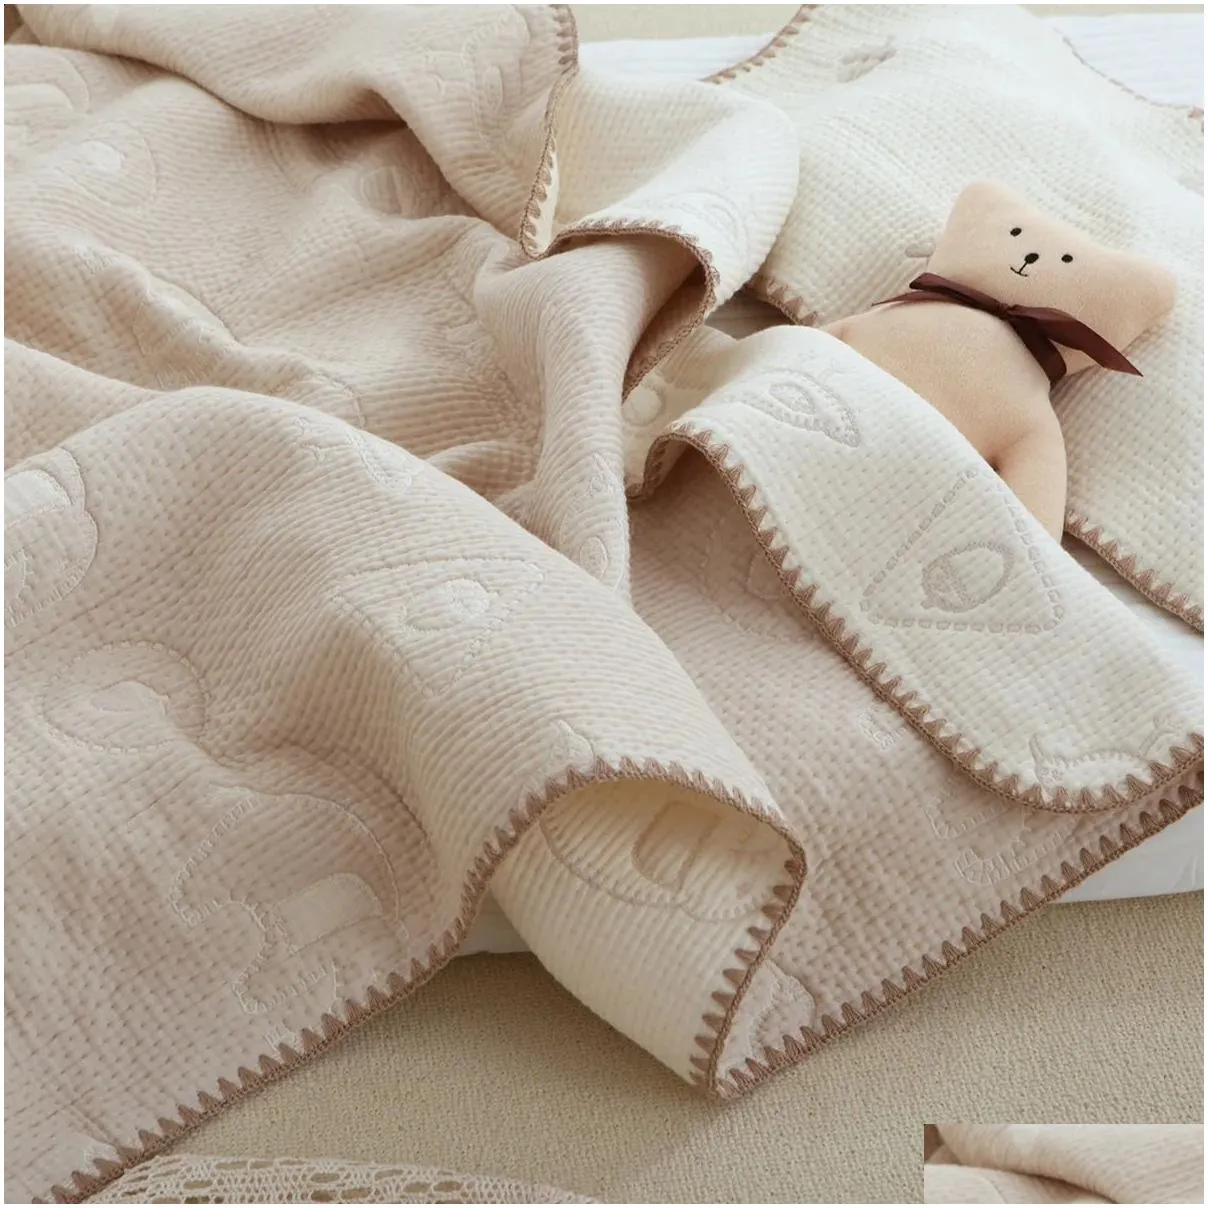 family kindergarten cotton sheets children`s bedding autumnwinter multifunctional blanket soft and skin friendly 240127